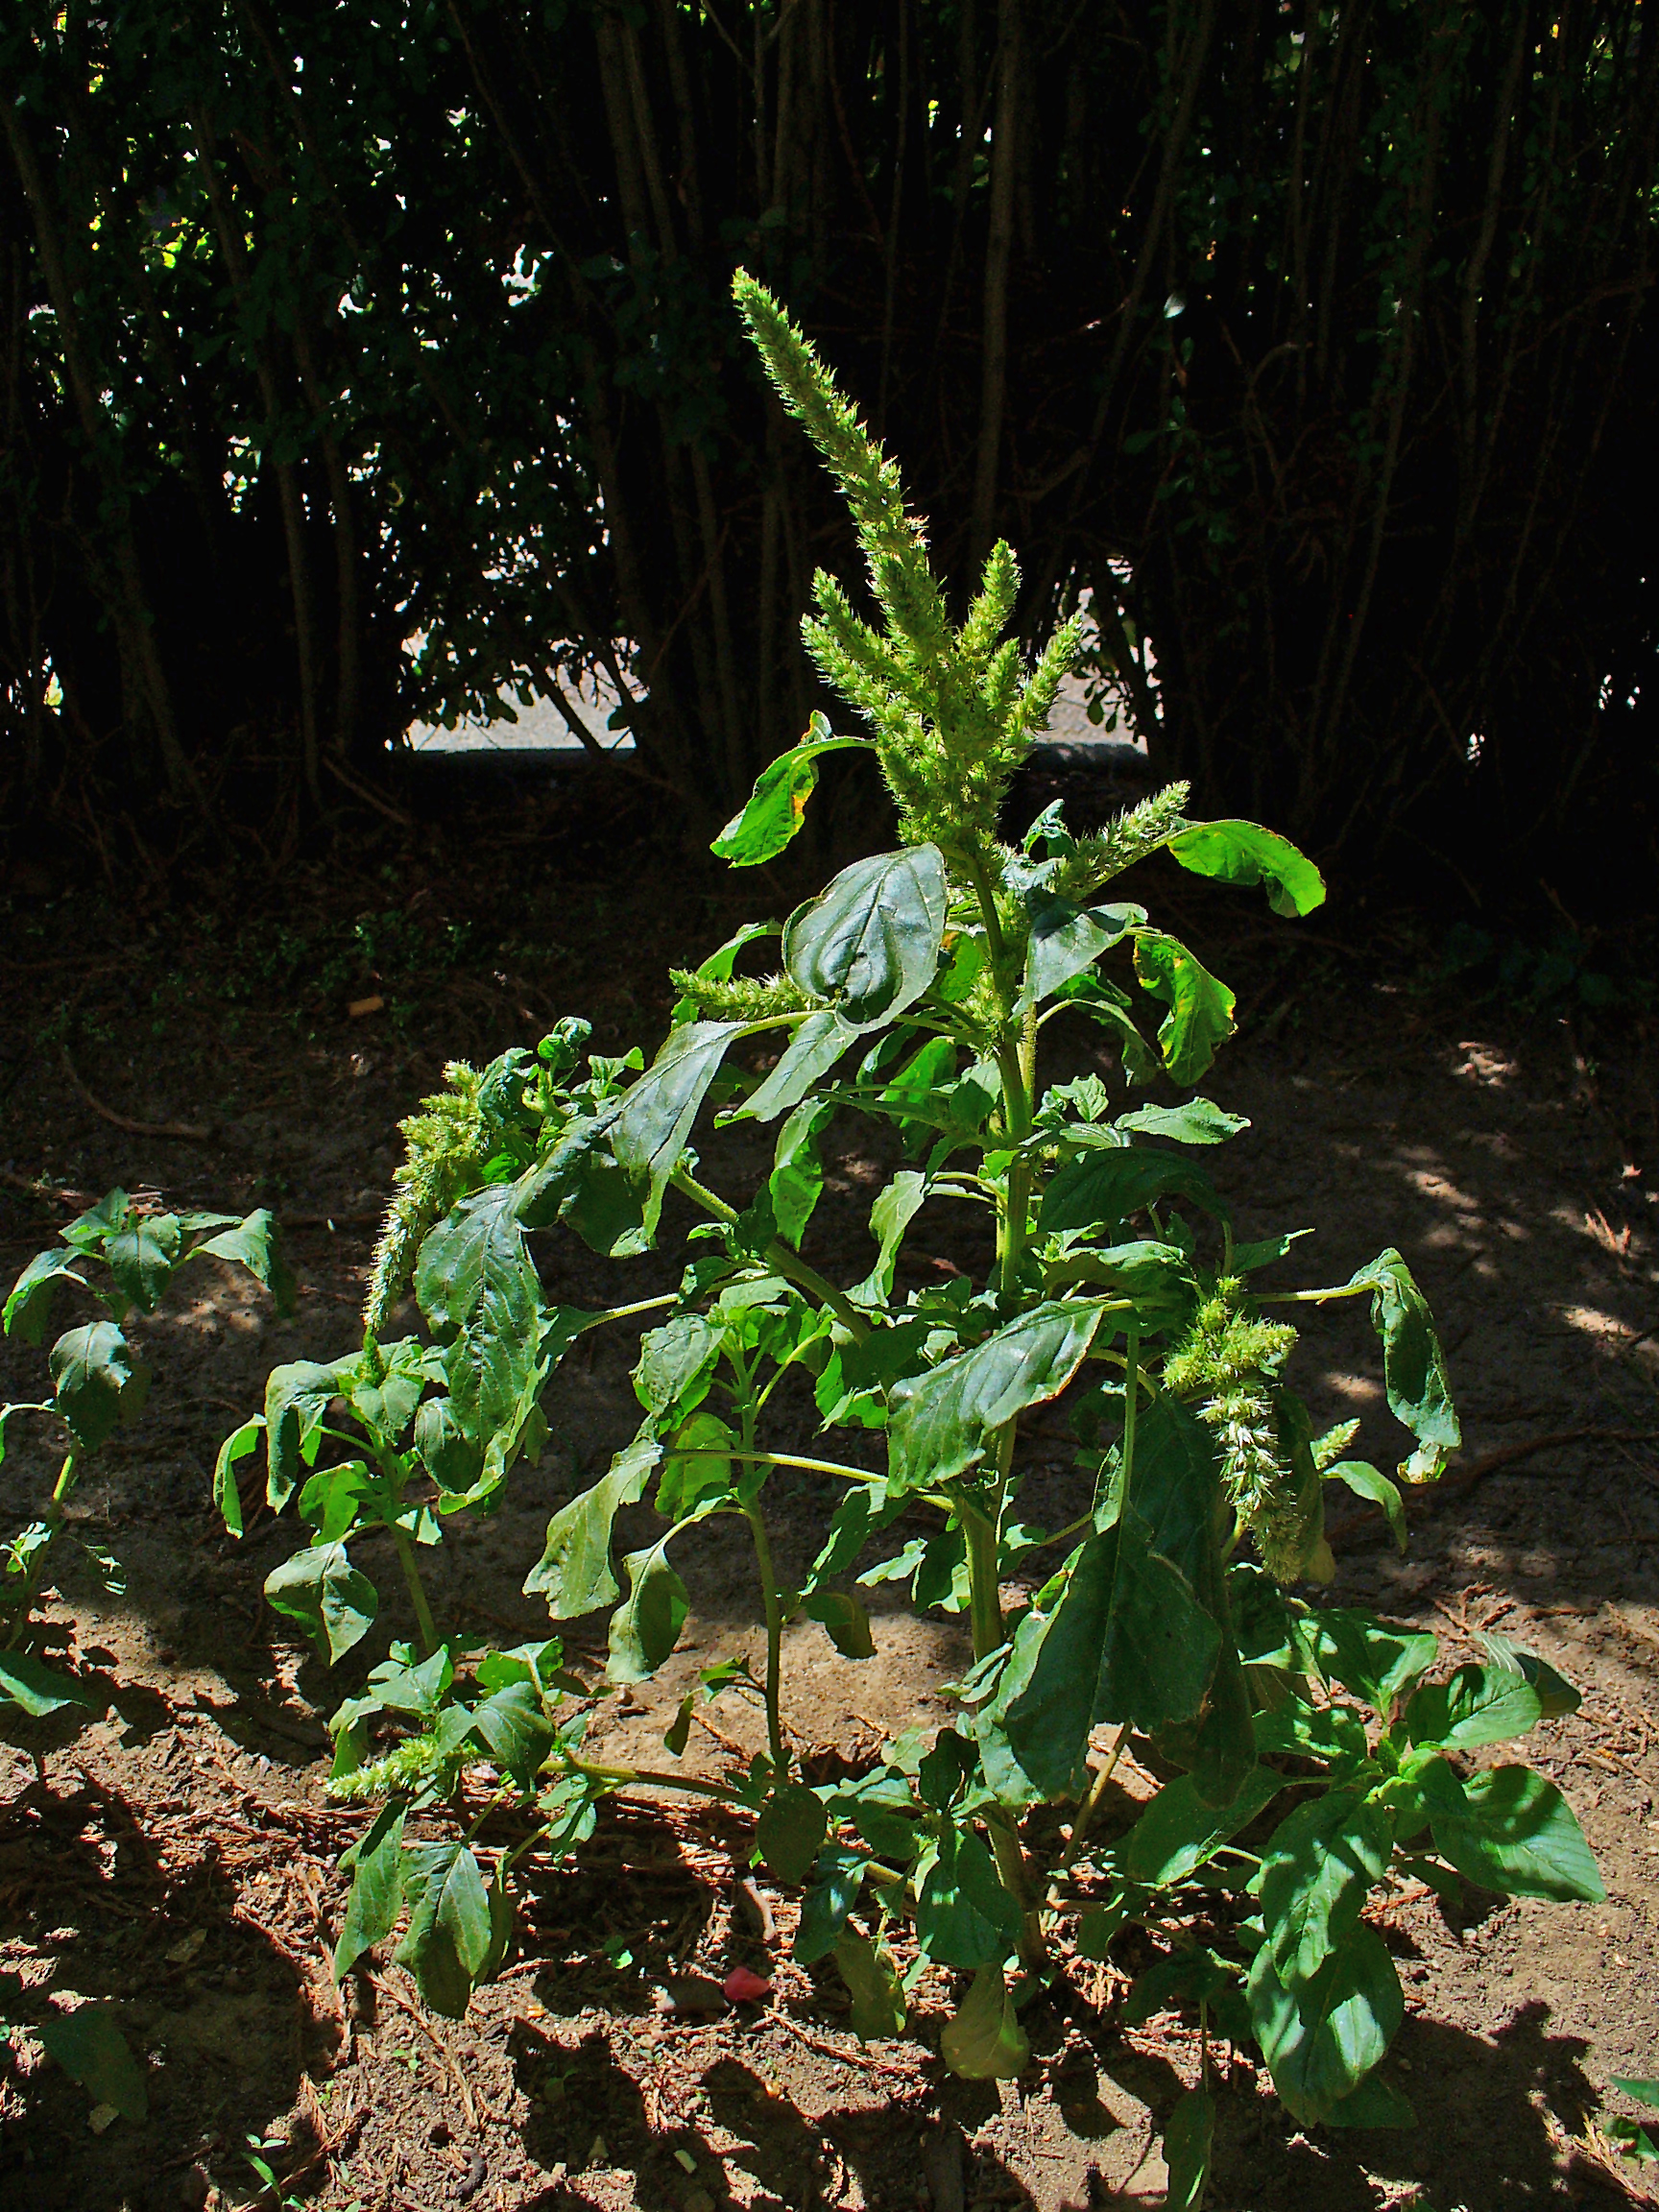 Smooth pigweed (Amaranthus hybridus)